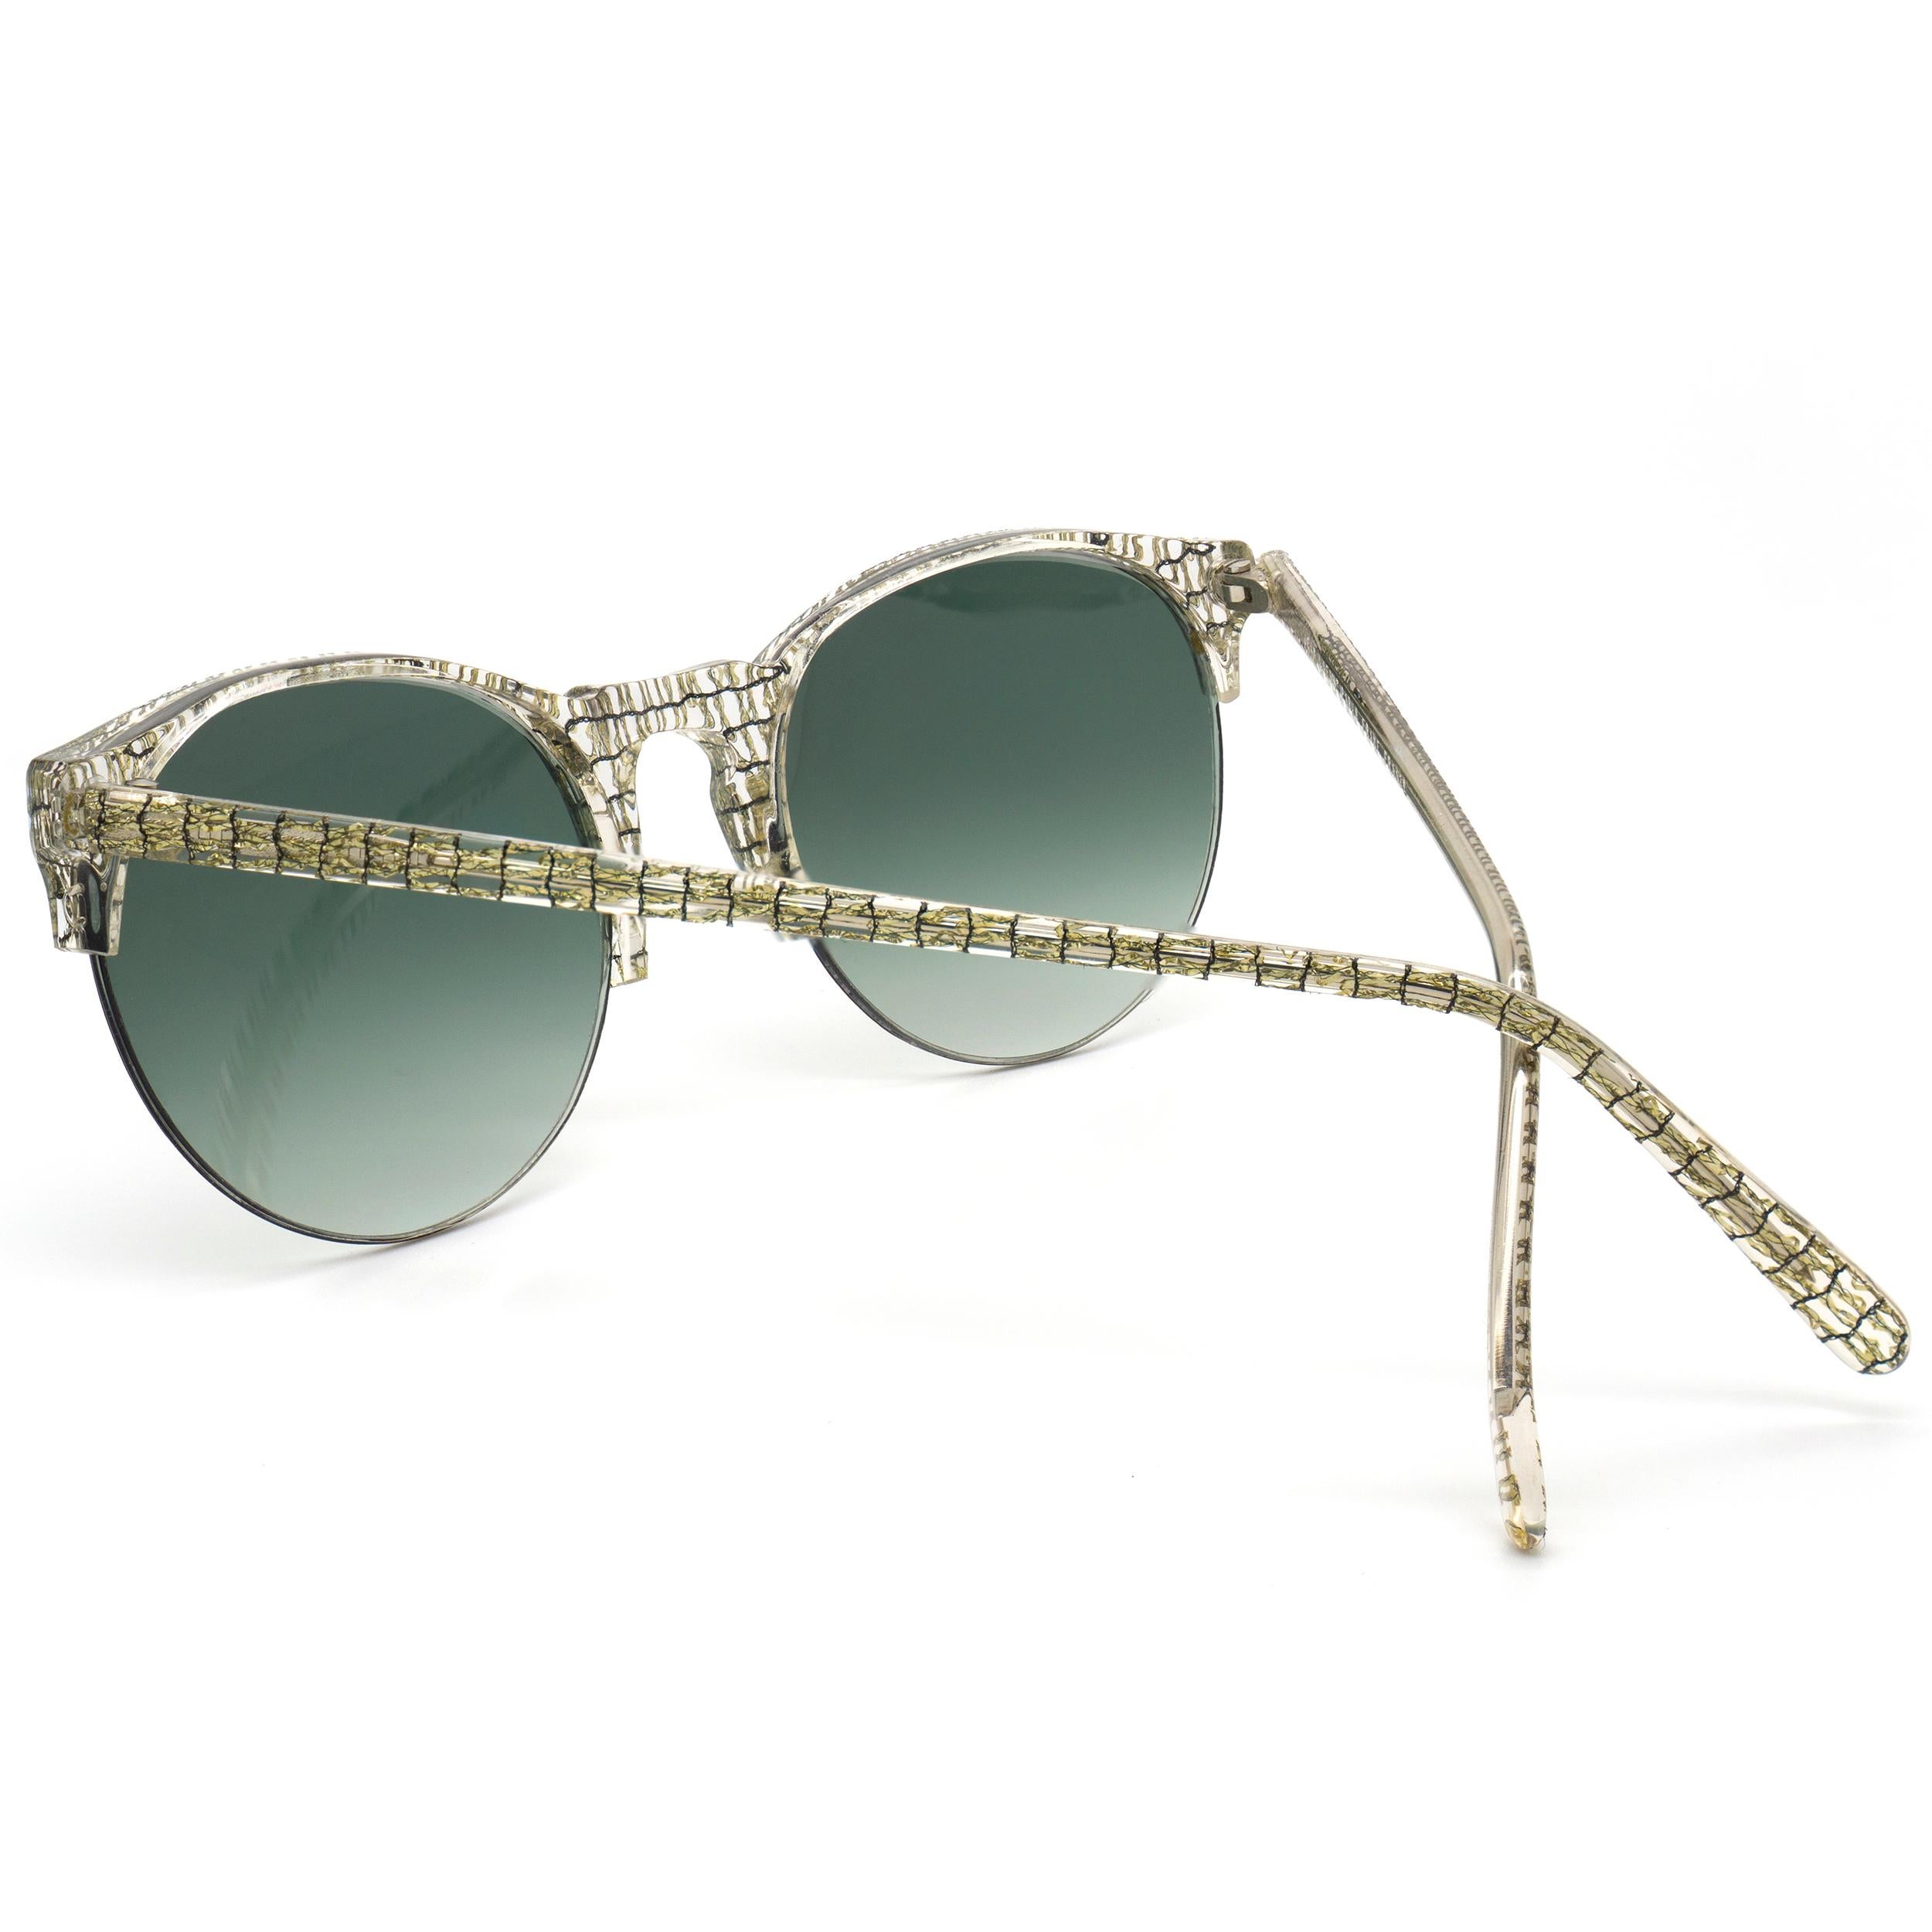 Gray Jean LaFont round vintage sunglasses, France 80s